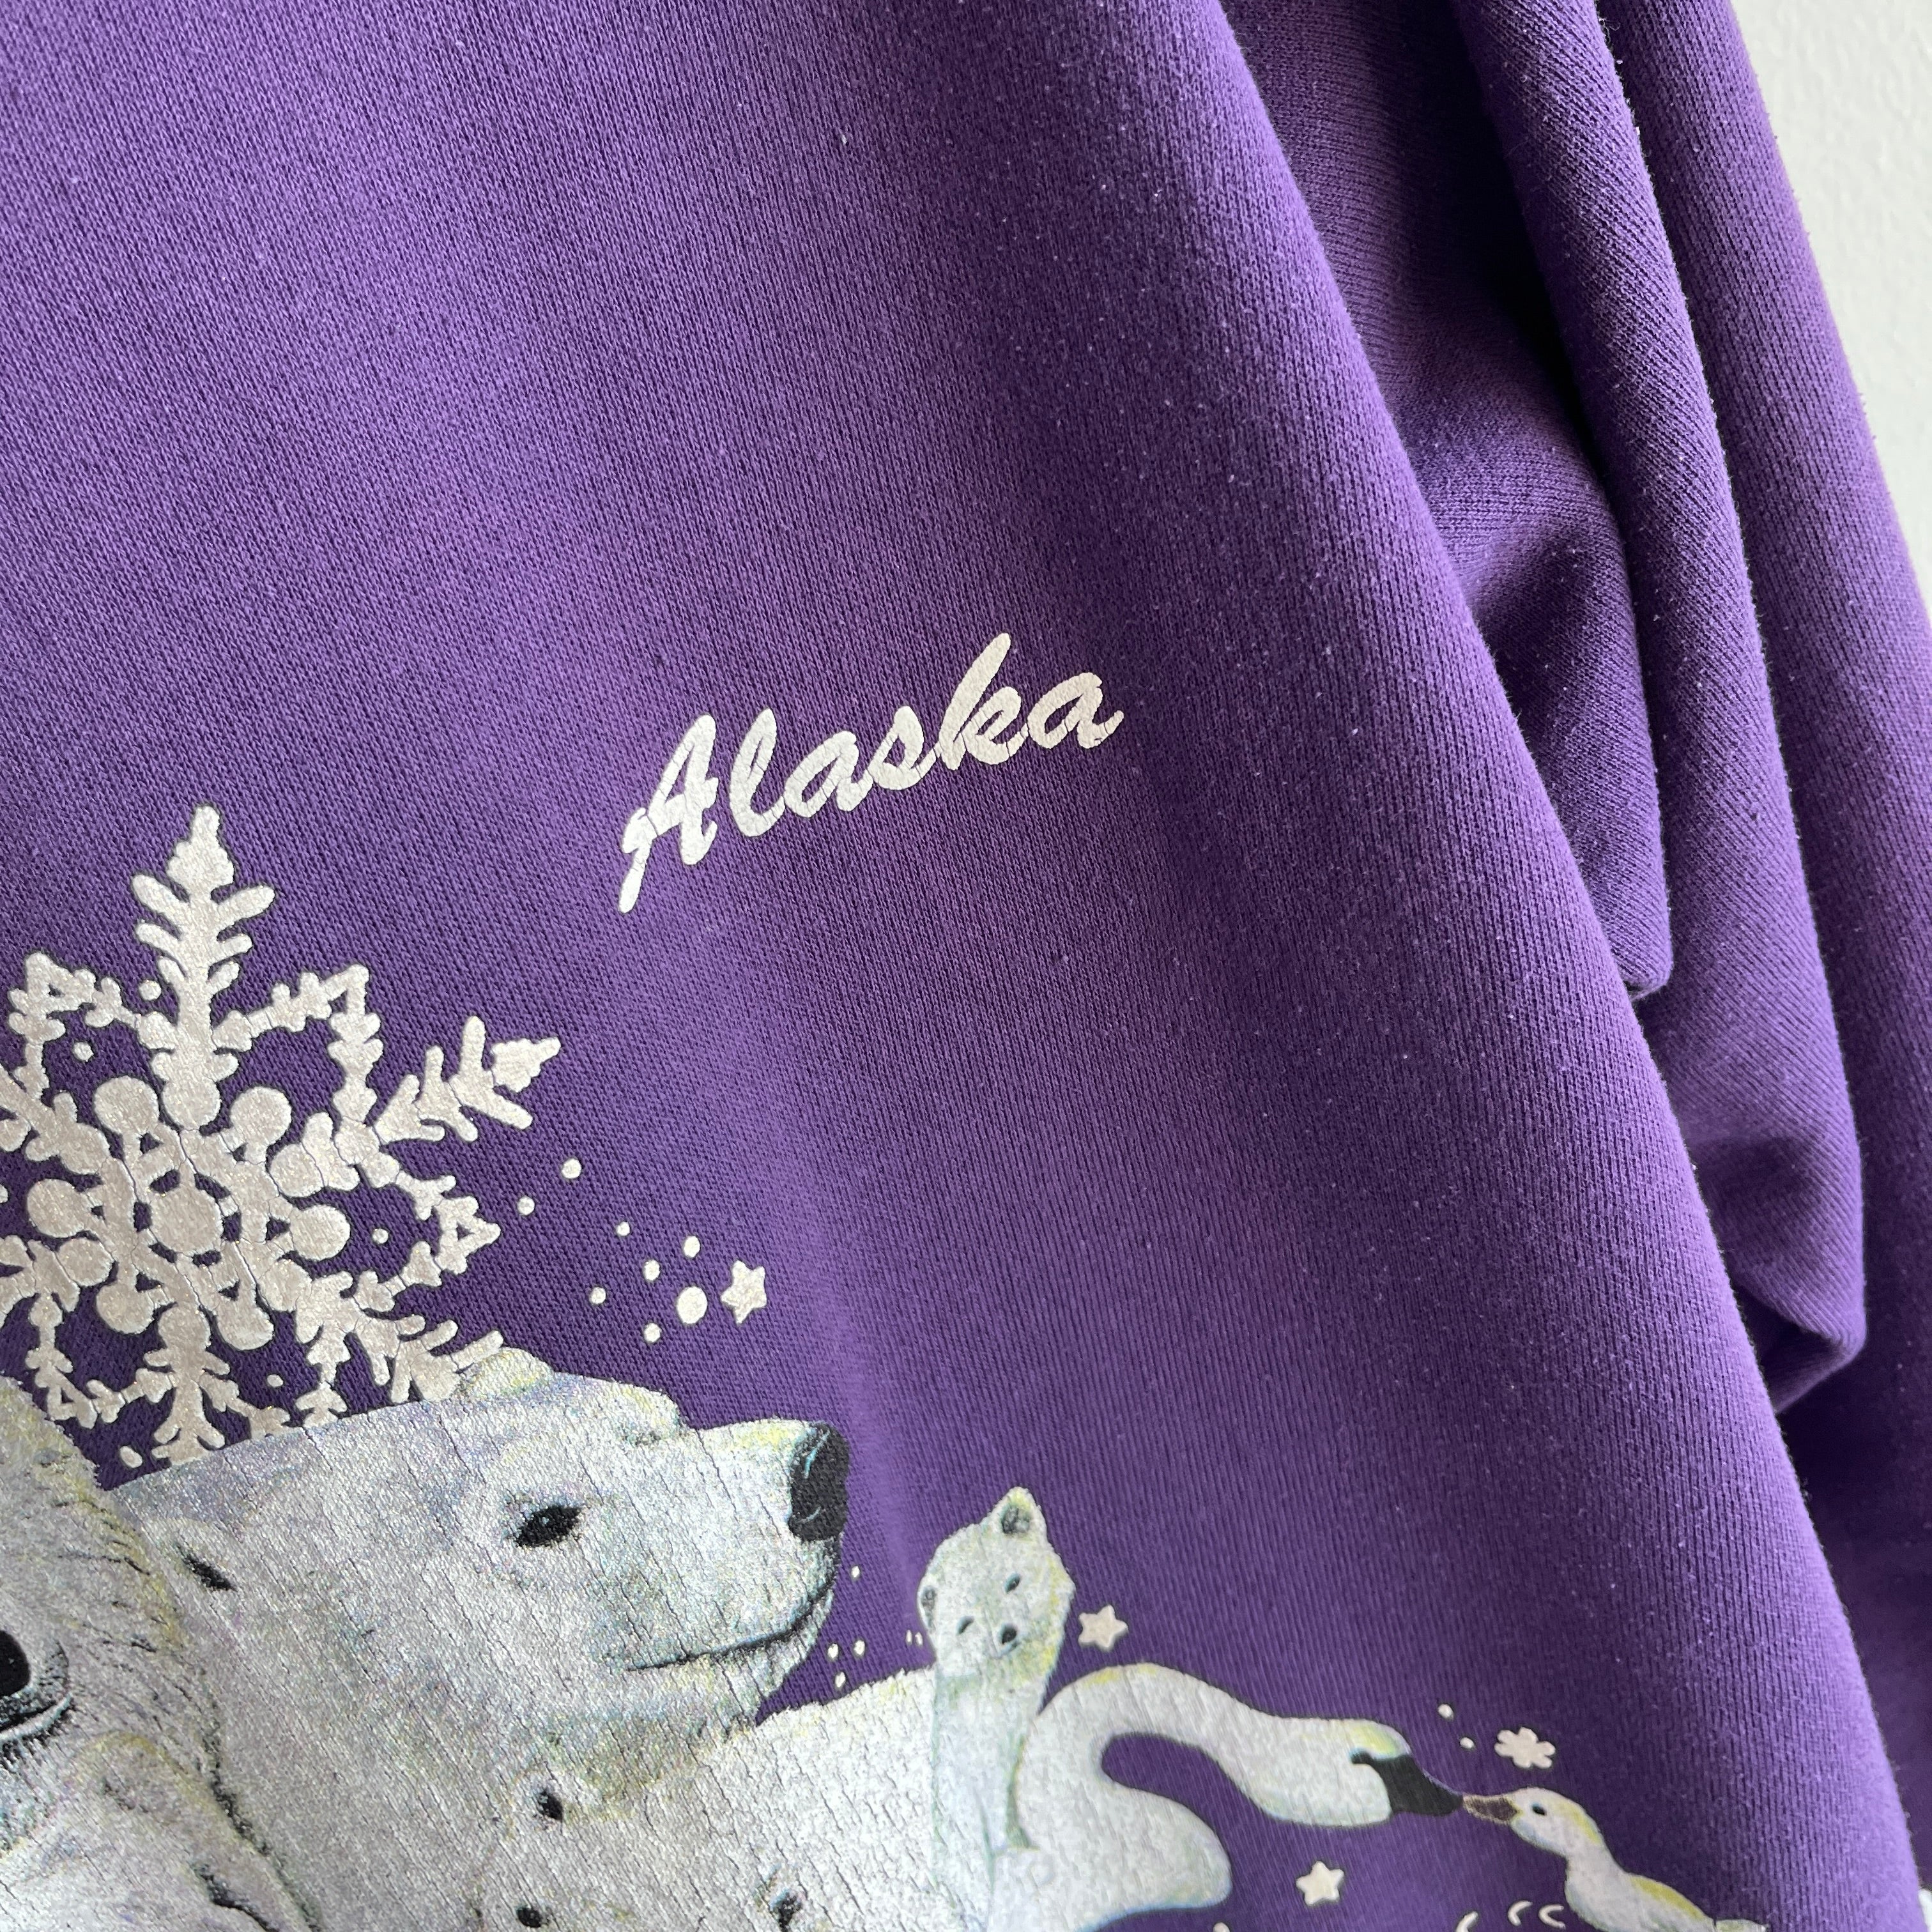 1990s Alaska Animal Buddy Sweatshirt with a Little Gosling ... Awwwww